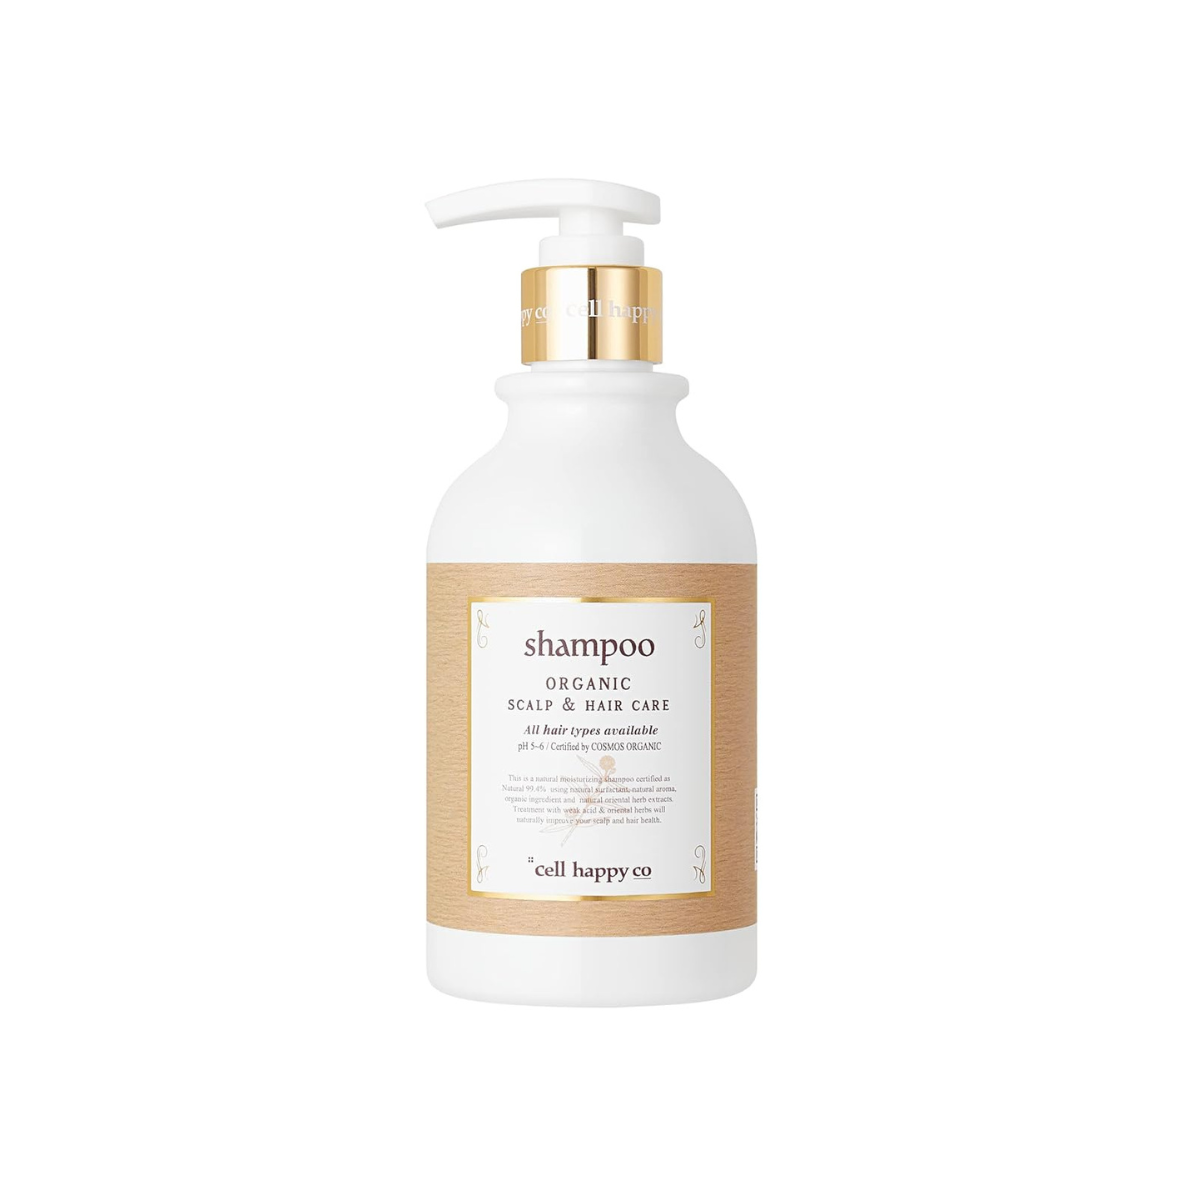 Cellhappyco Cosmos Organic Shampoo 300ml - DODOSKIN